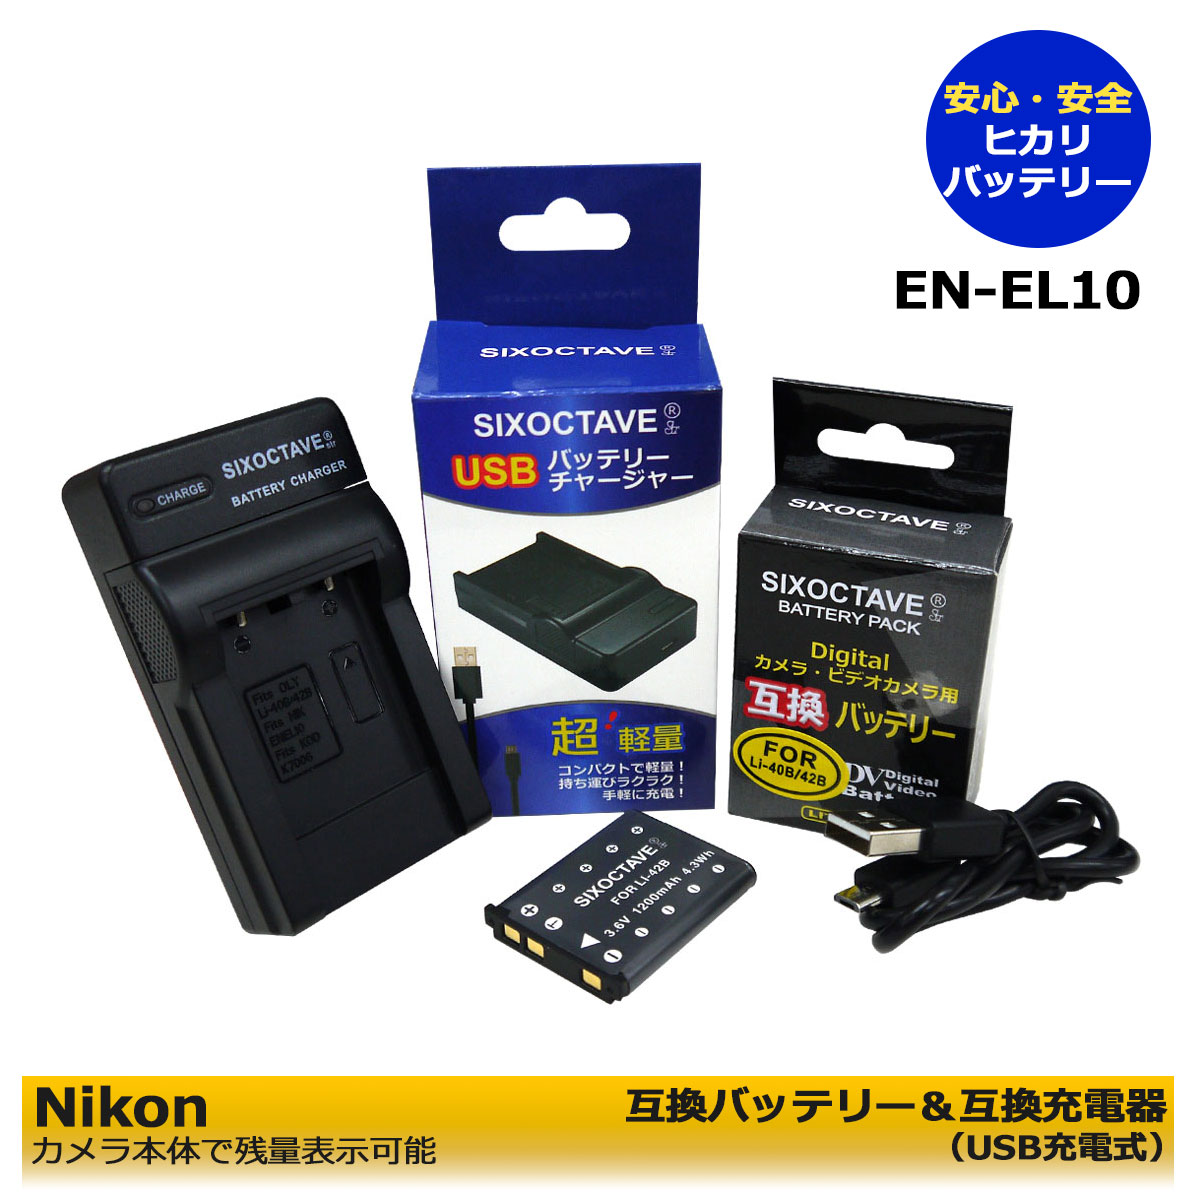 EN-EL10【あす楽対応】Nikon 互換バッテリー 1個と 互換USB充電器 の2点セット Coolpix S500 / Coolpix S510 / Coolpix S5100 / Coolpix S520 / Coolpix S570 / Coolpix S60 / Coolpix S600 / Coolpix S700 / Coolpix S80